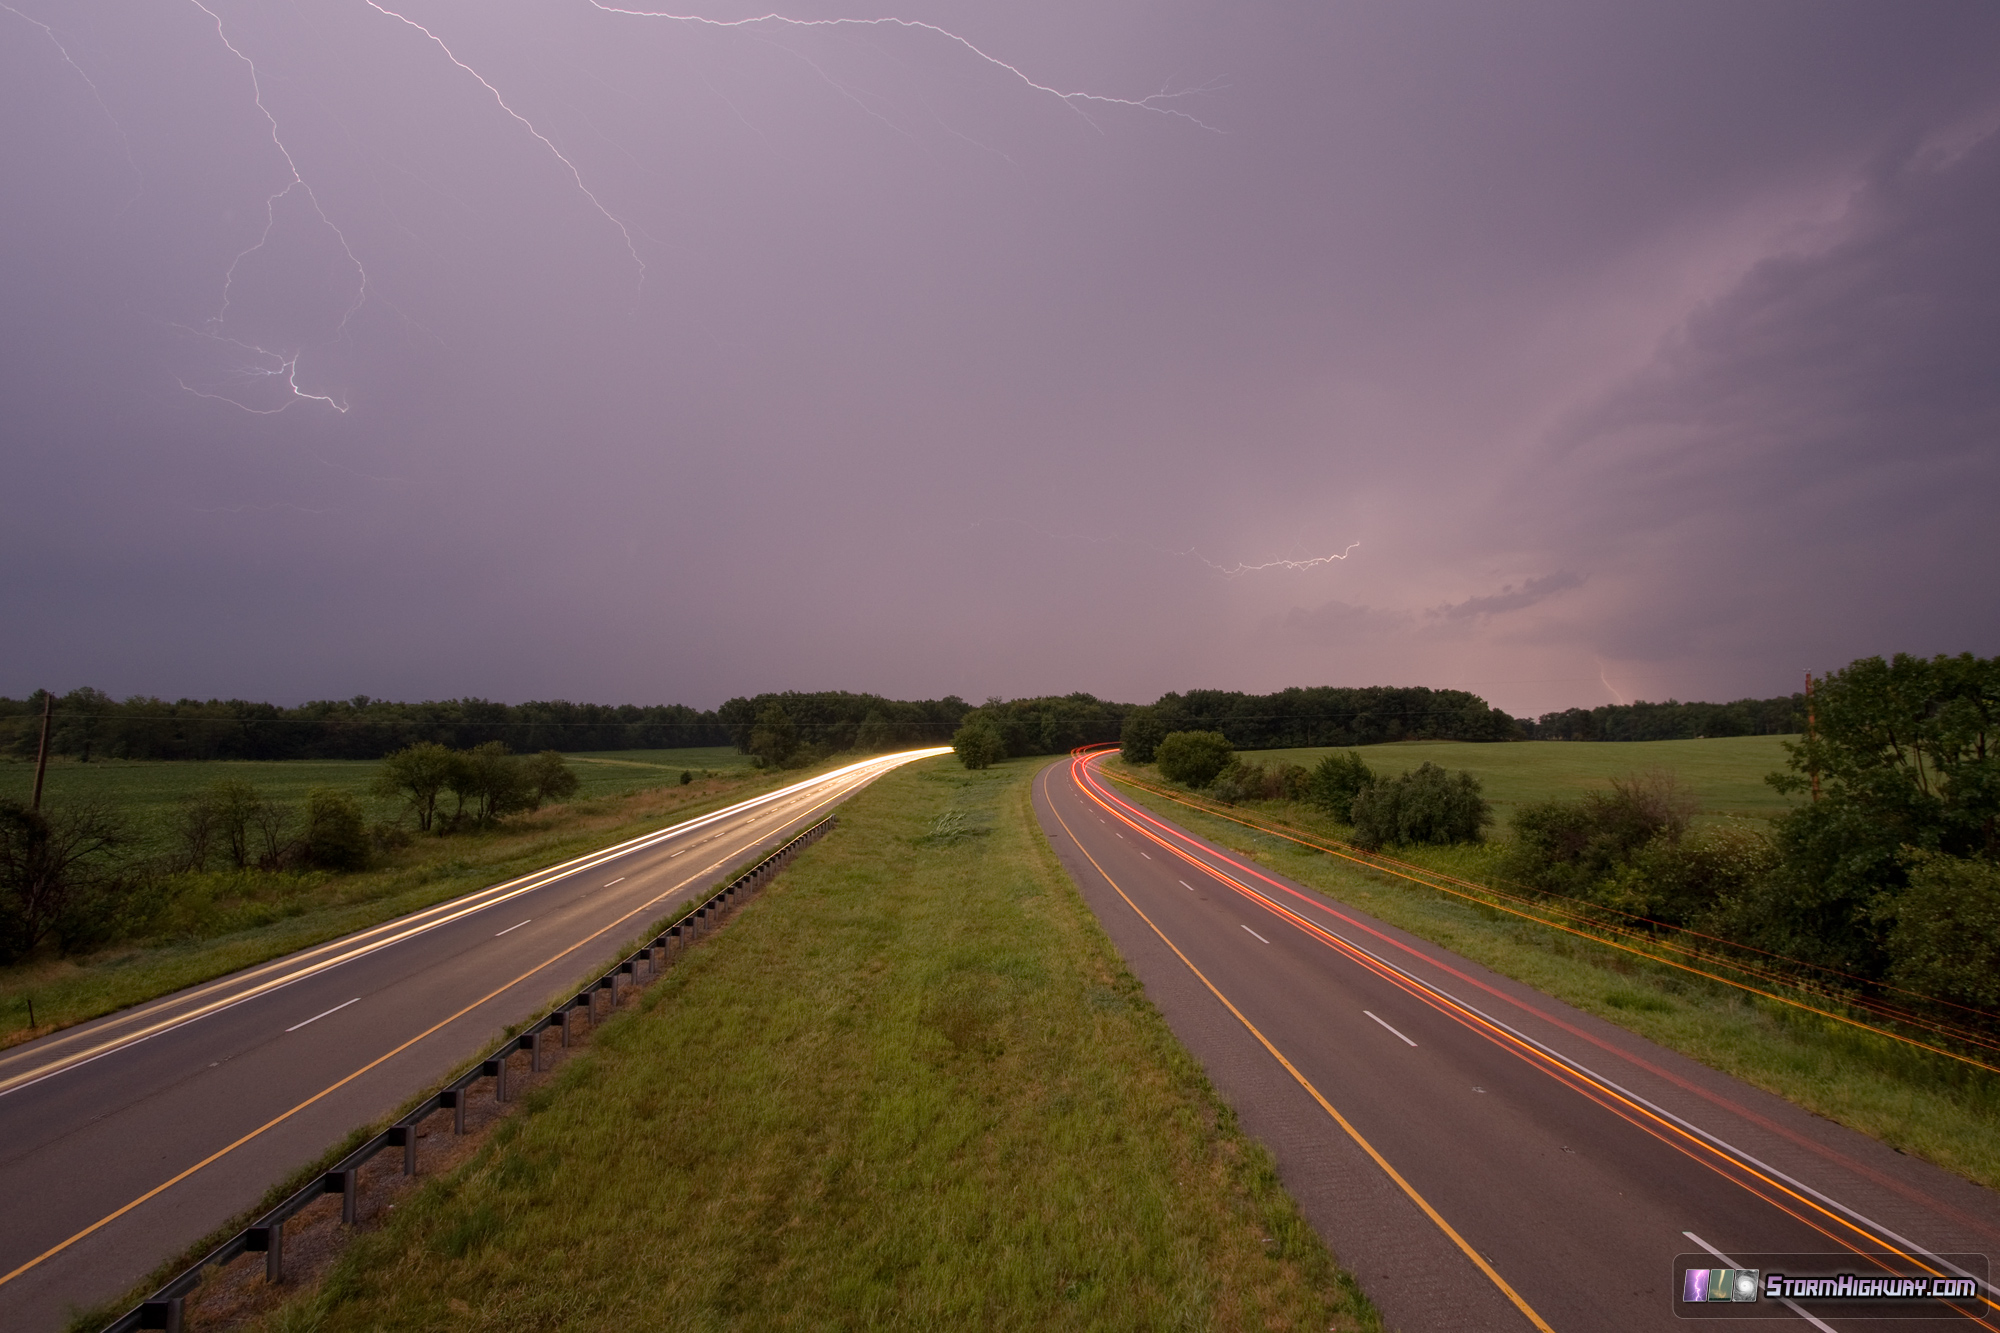 Intense lightning flash near Wayne City, IL - August 31, 2013